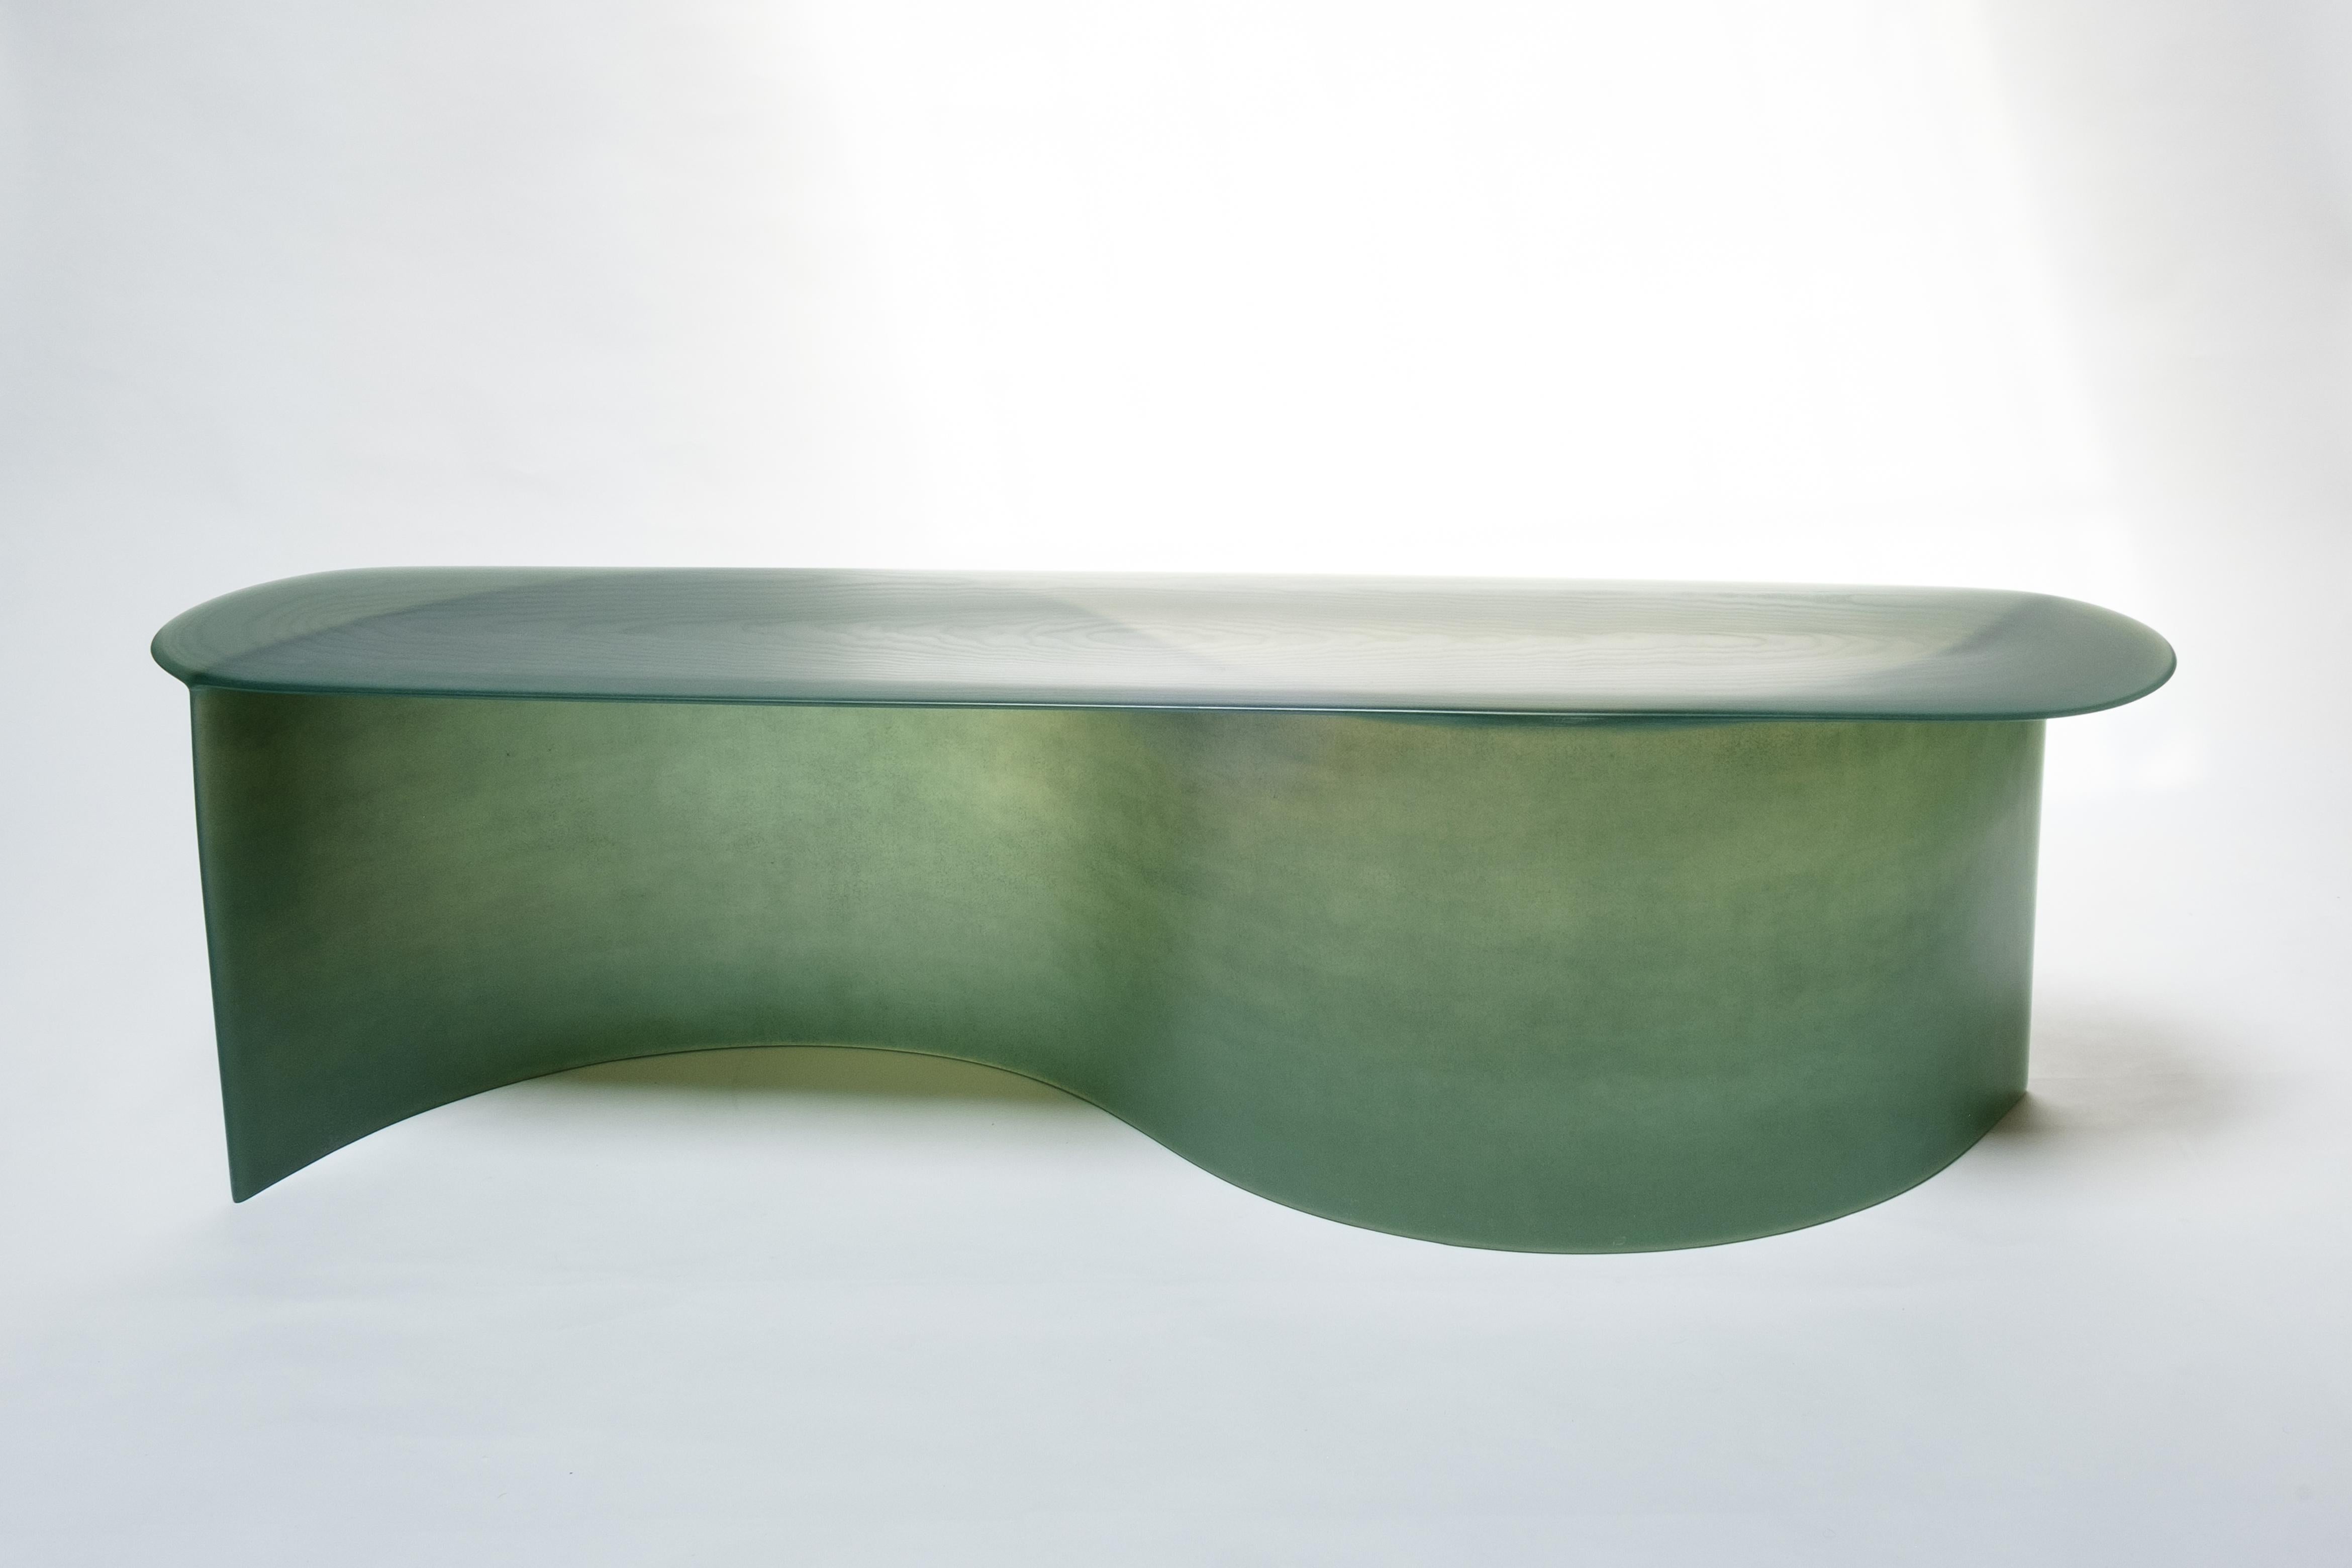 Resin Contemporary Fiberglass New Wave Bench, by Lukas Cober